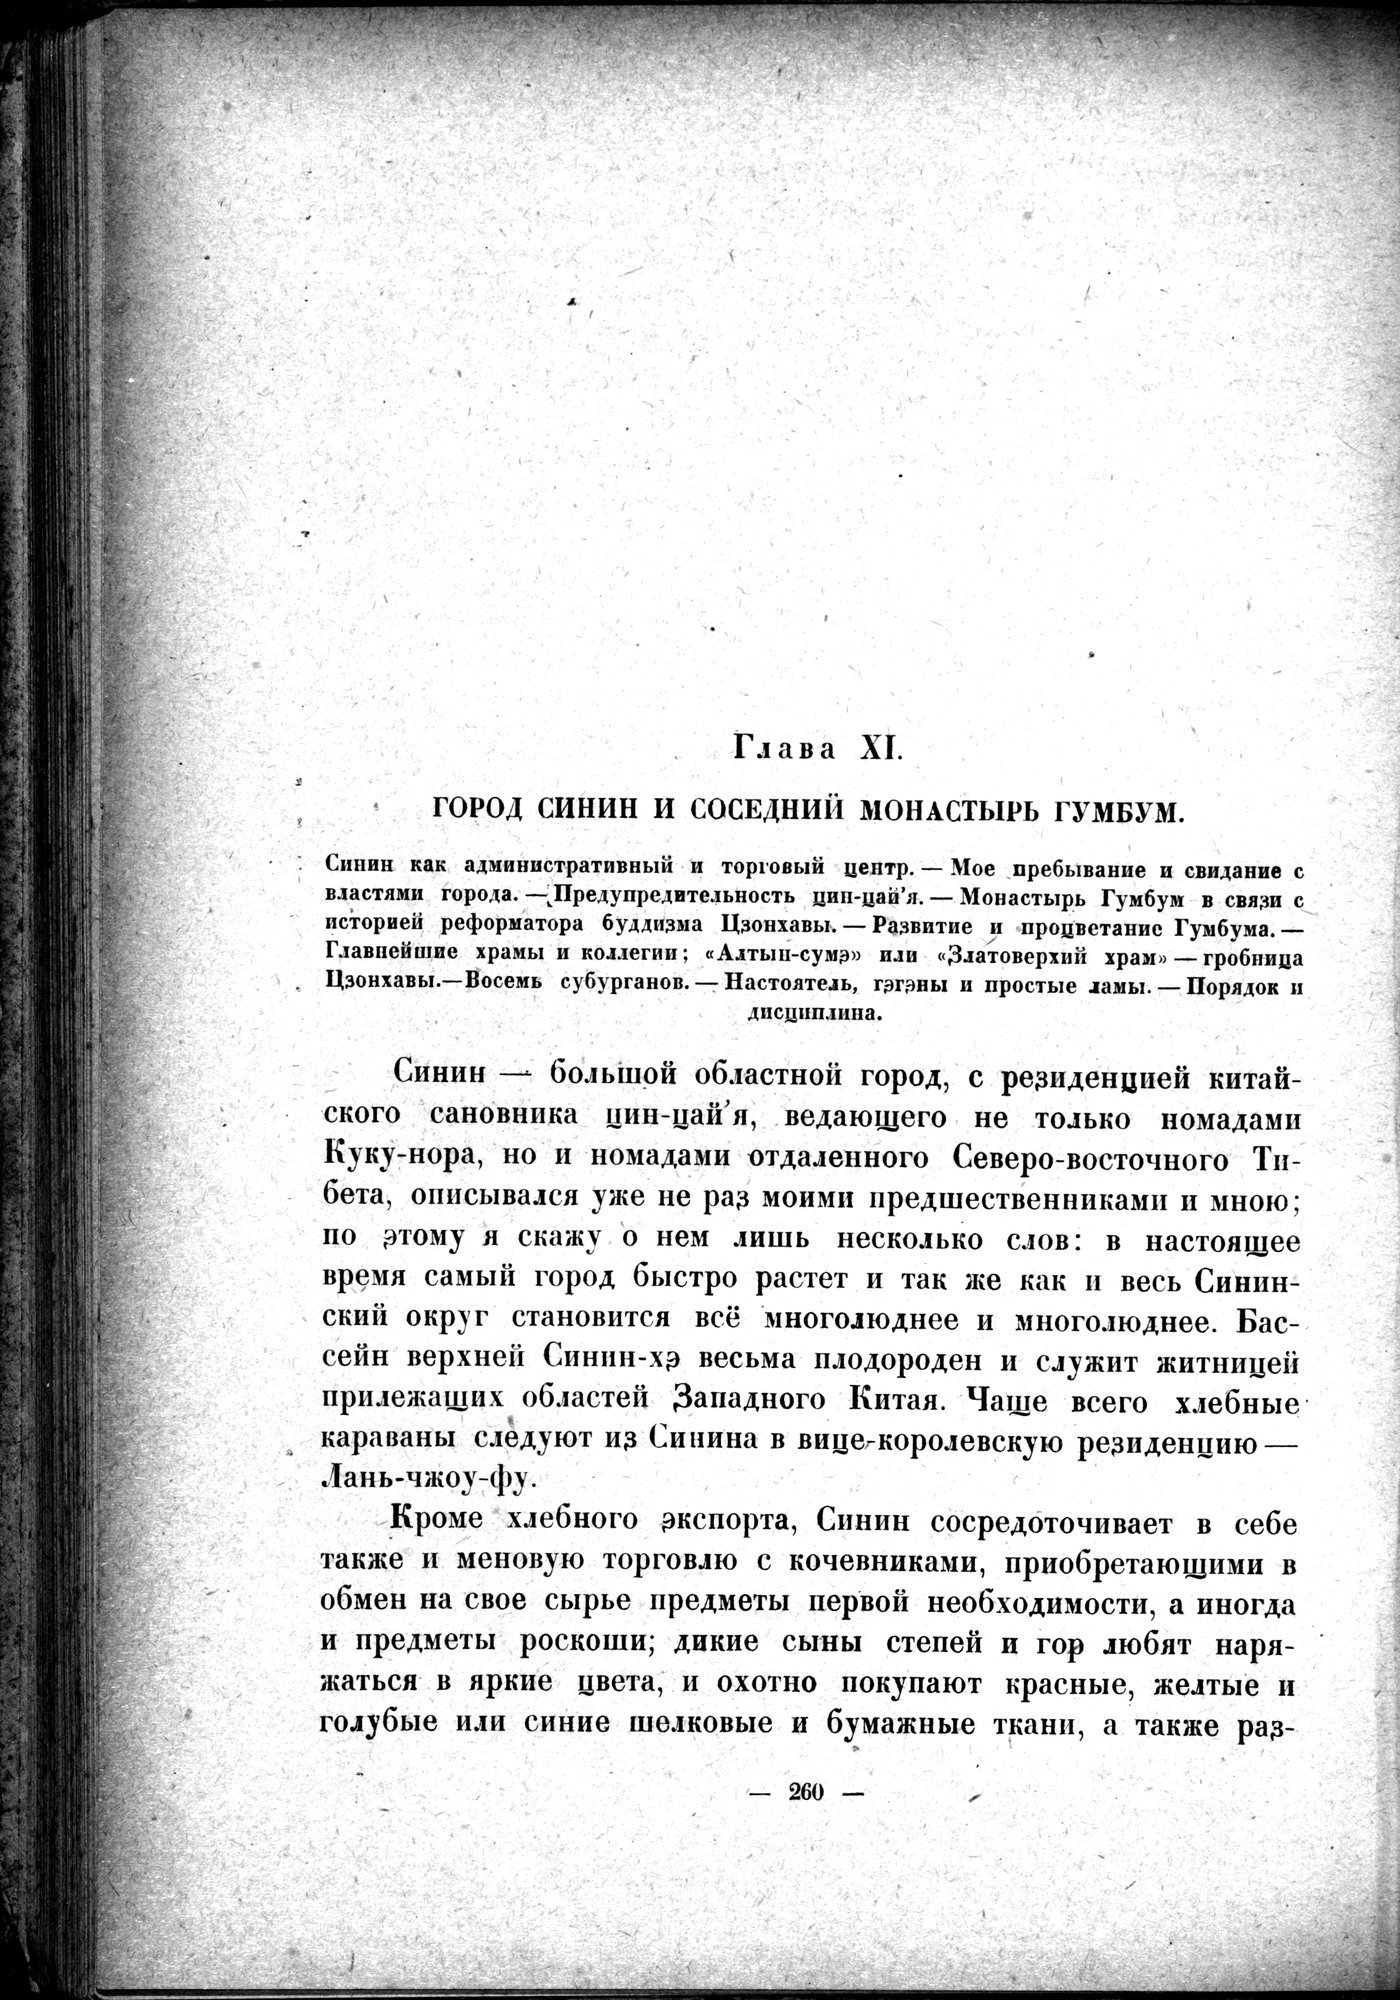 Mongoliya i Amdo i mertby gorod Khara-Khoto : vol.1 / Page 306 (Grayscale High Resolution Image)